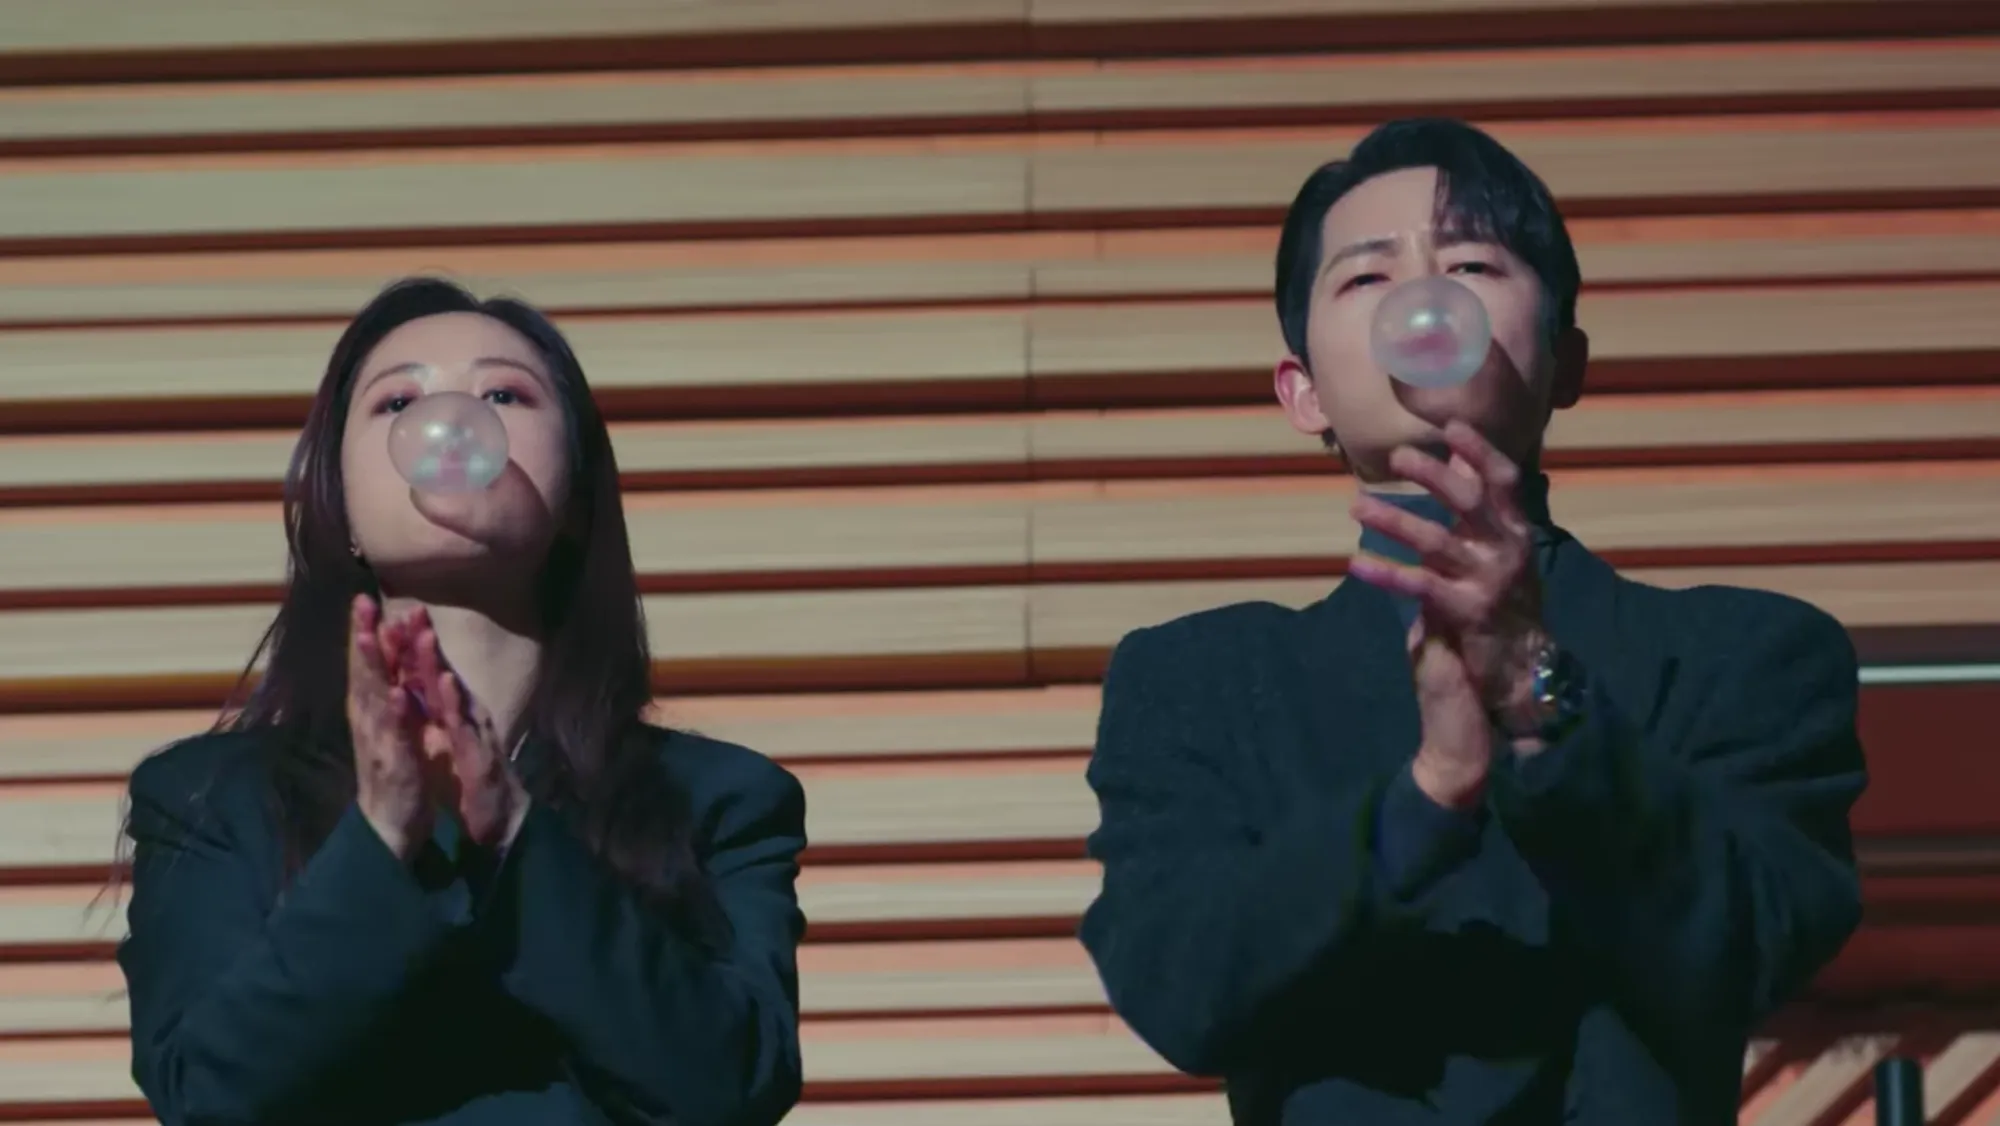 Netflix's Kdrama Vincenzo Review starring Song Joong Ki and Jeon Yeo Bin (via kdramaomo.com) 